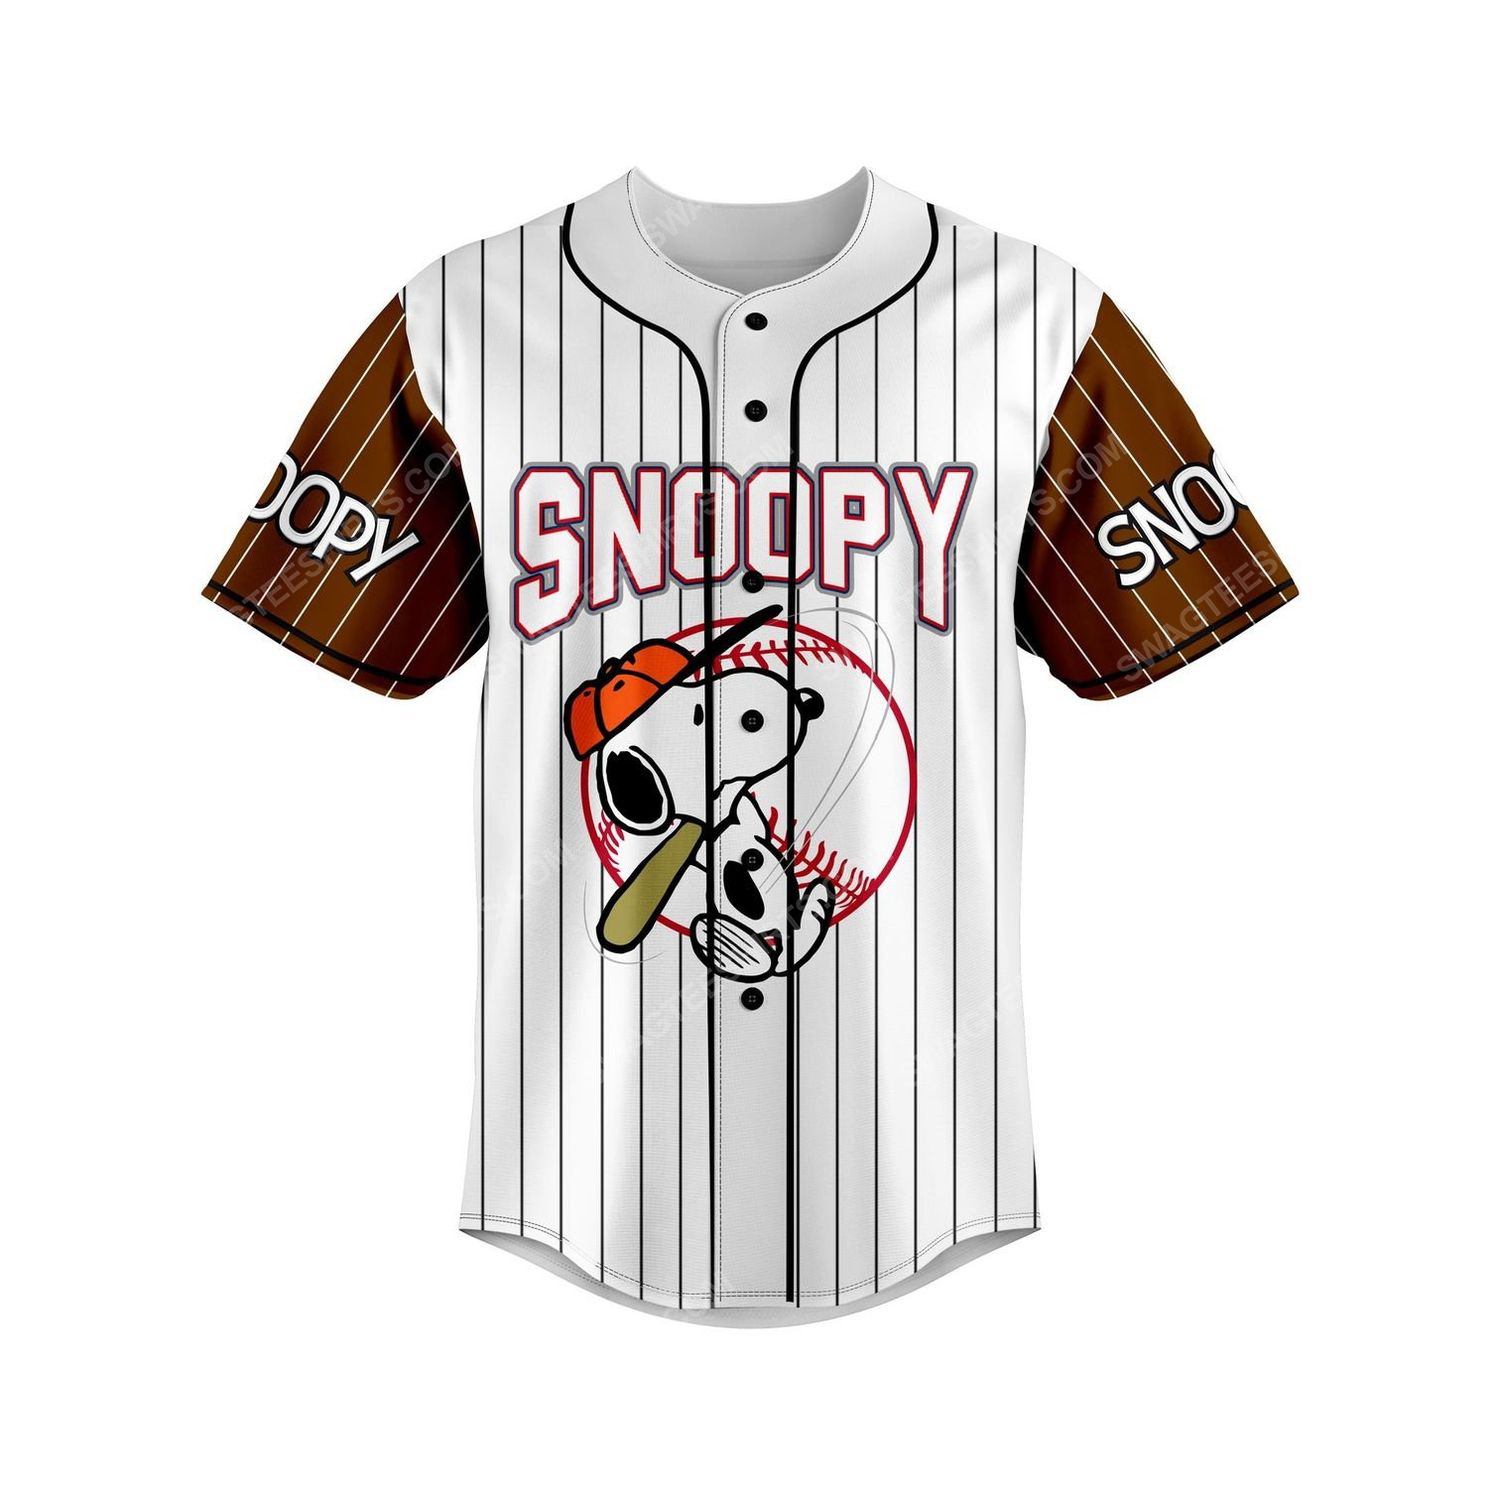 Custom snoopy and charlie brown full print baseball jersey 2 - Copy